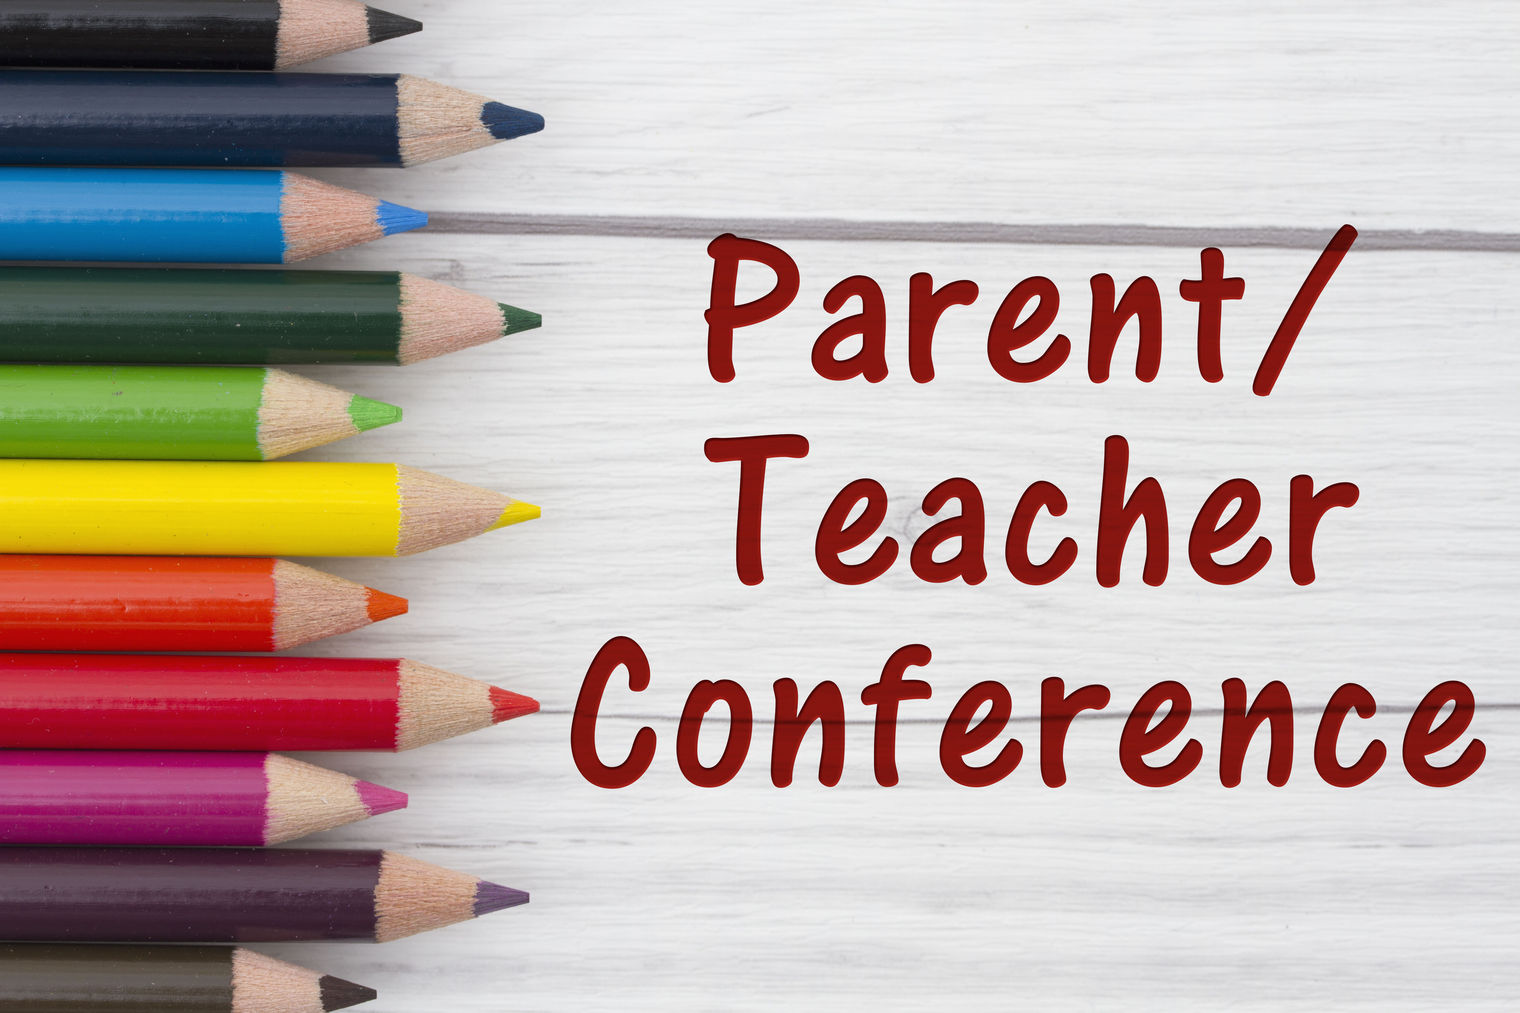 Colored pencils against white background.  "Parent/Teacher Conference"